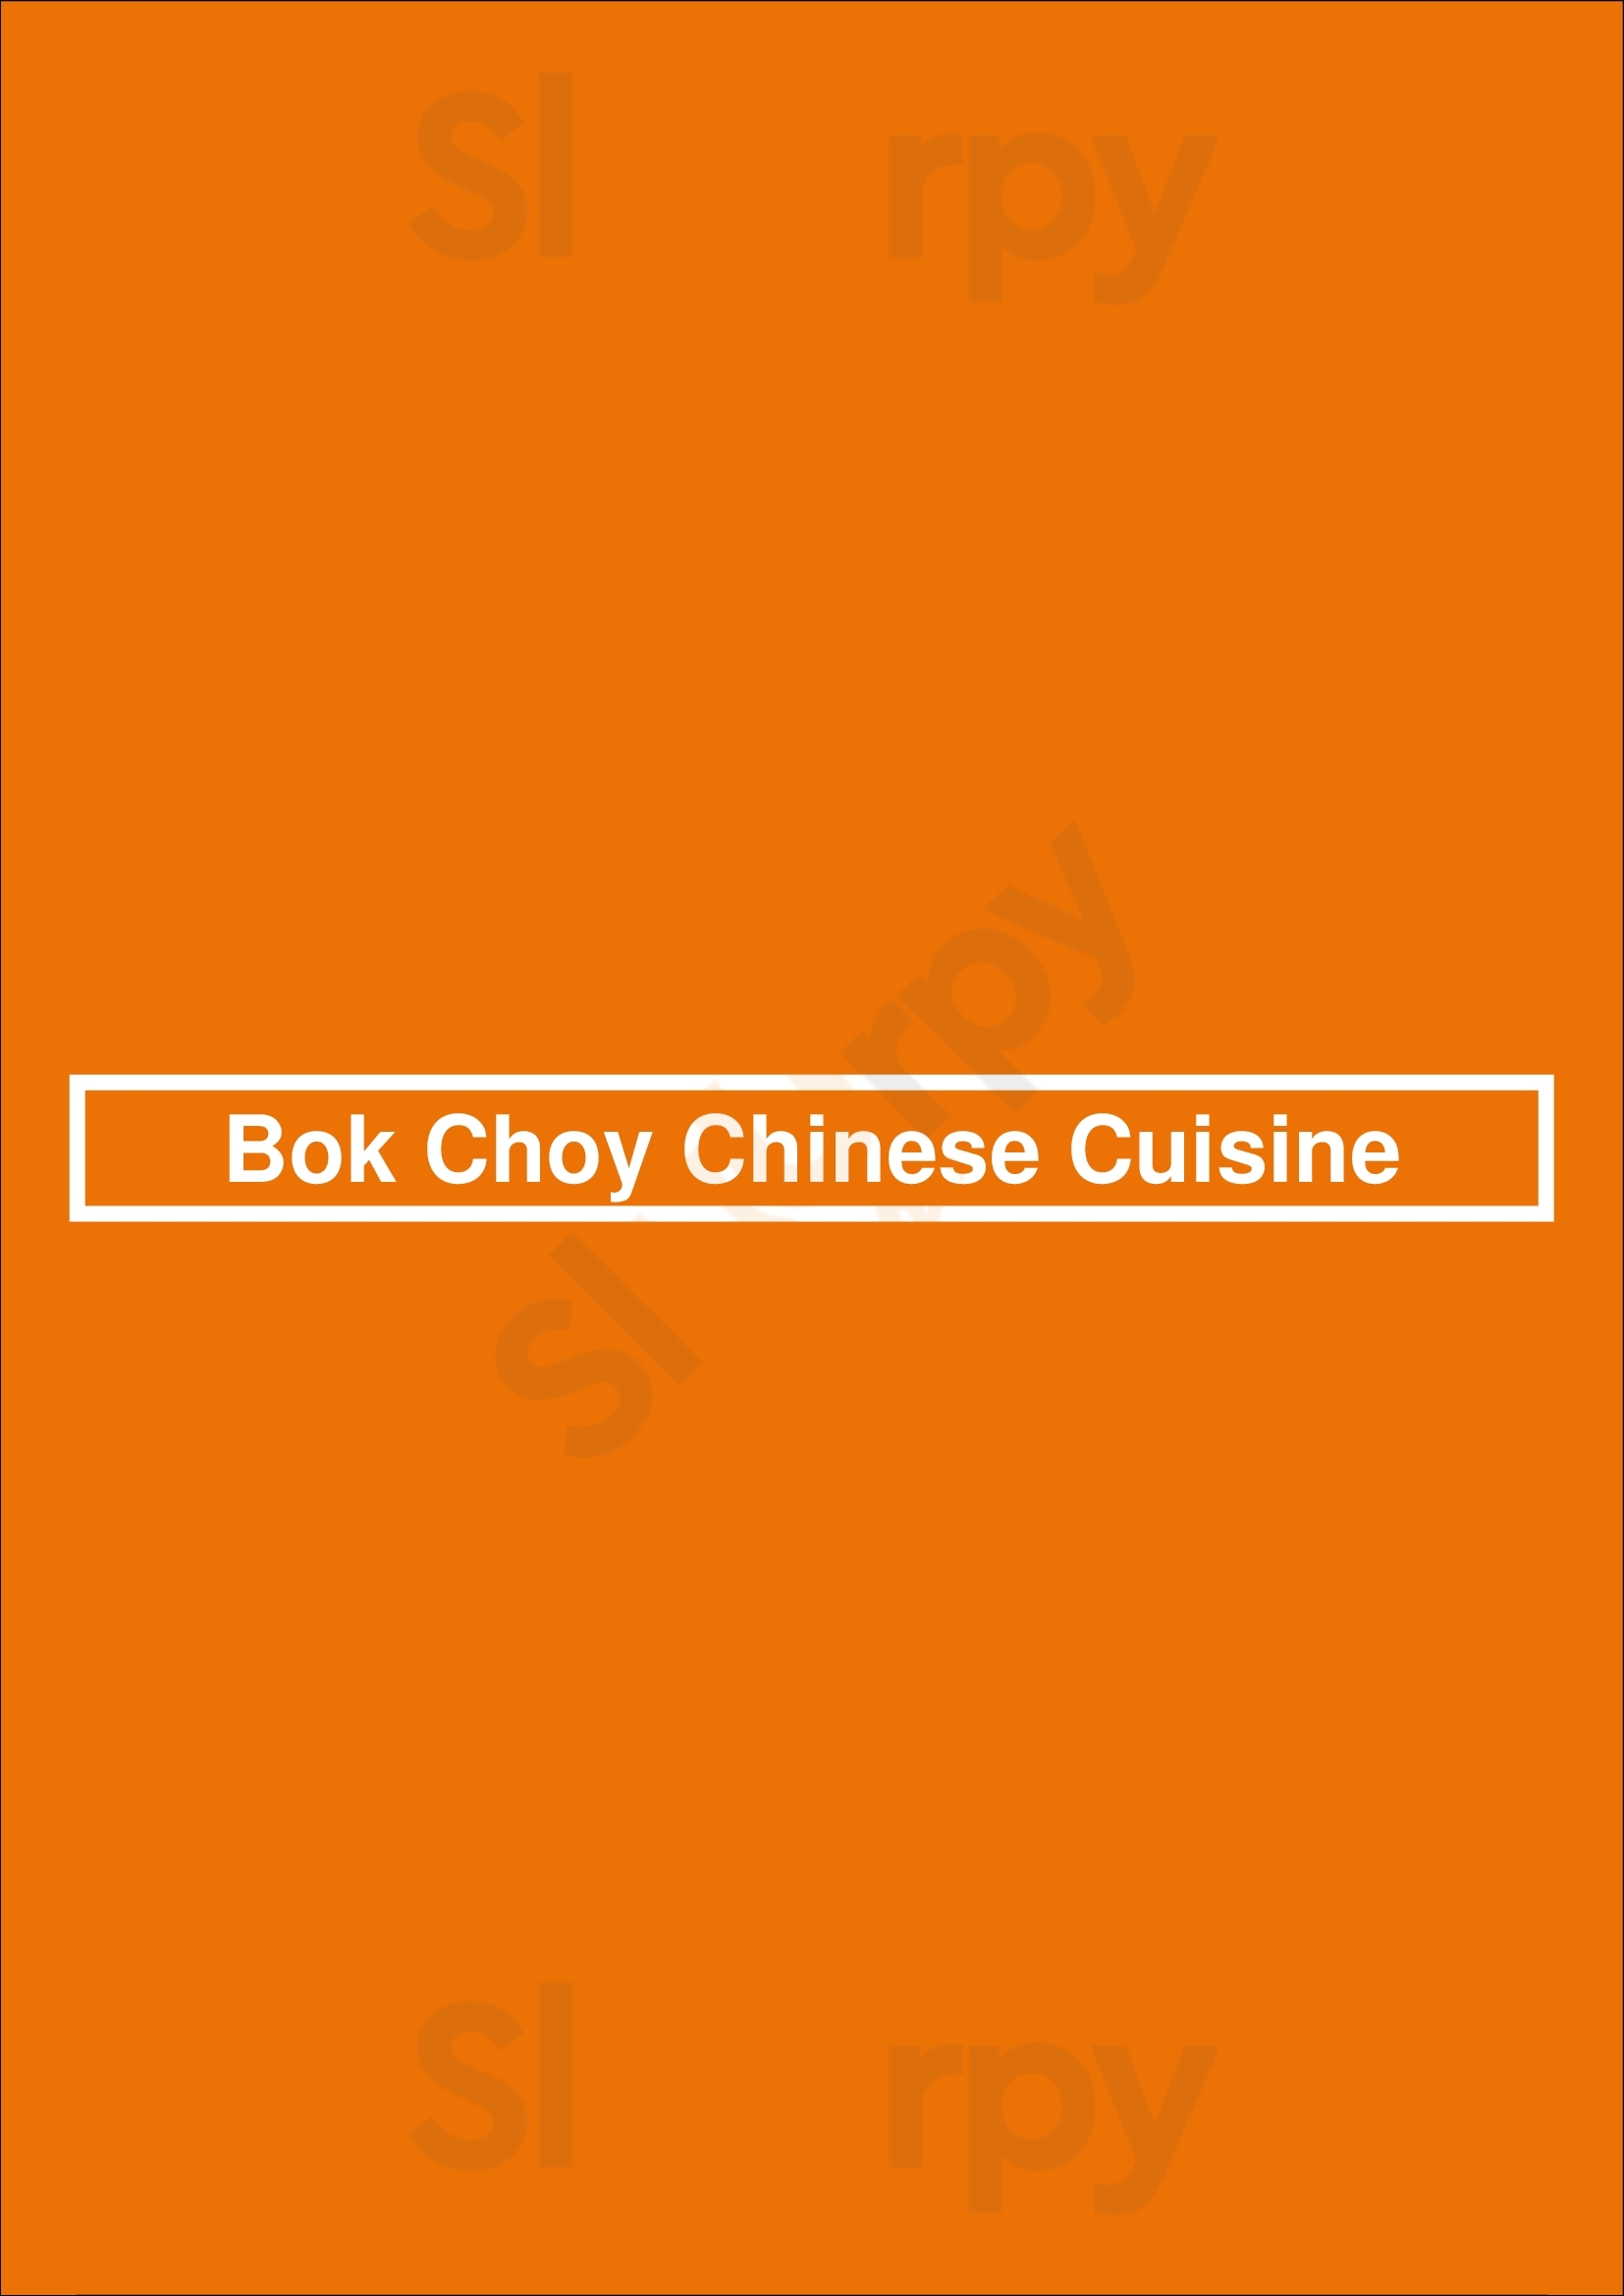 Bok Choy Chinese Cuisine Brighton Menu - 1